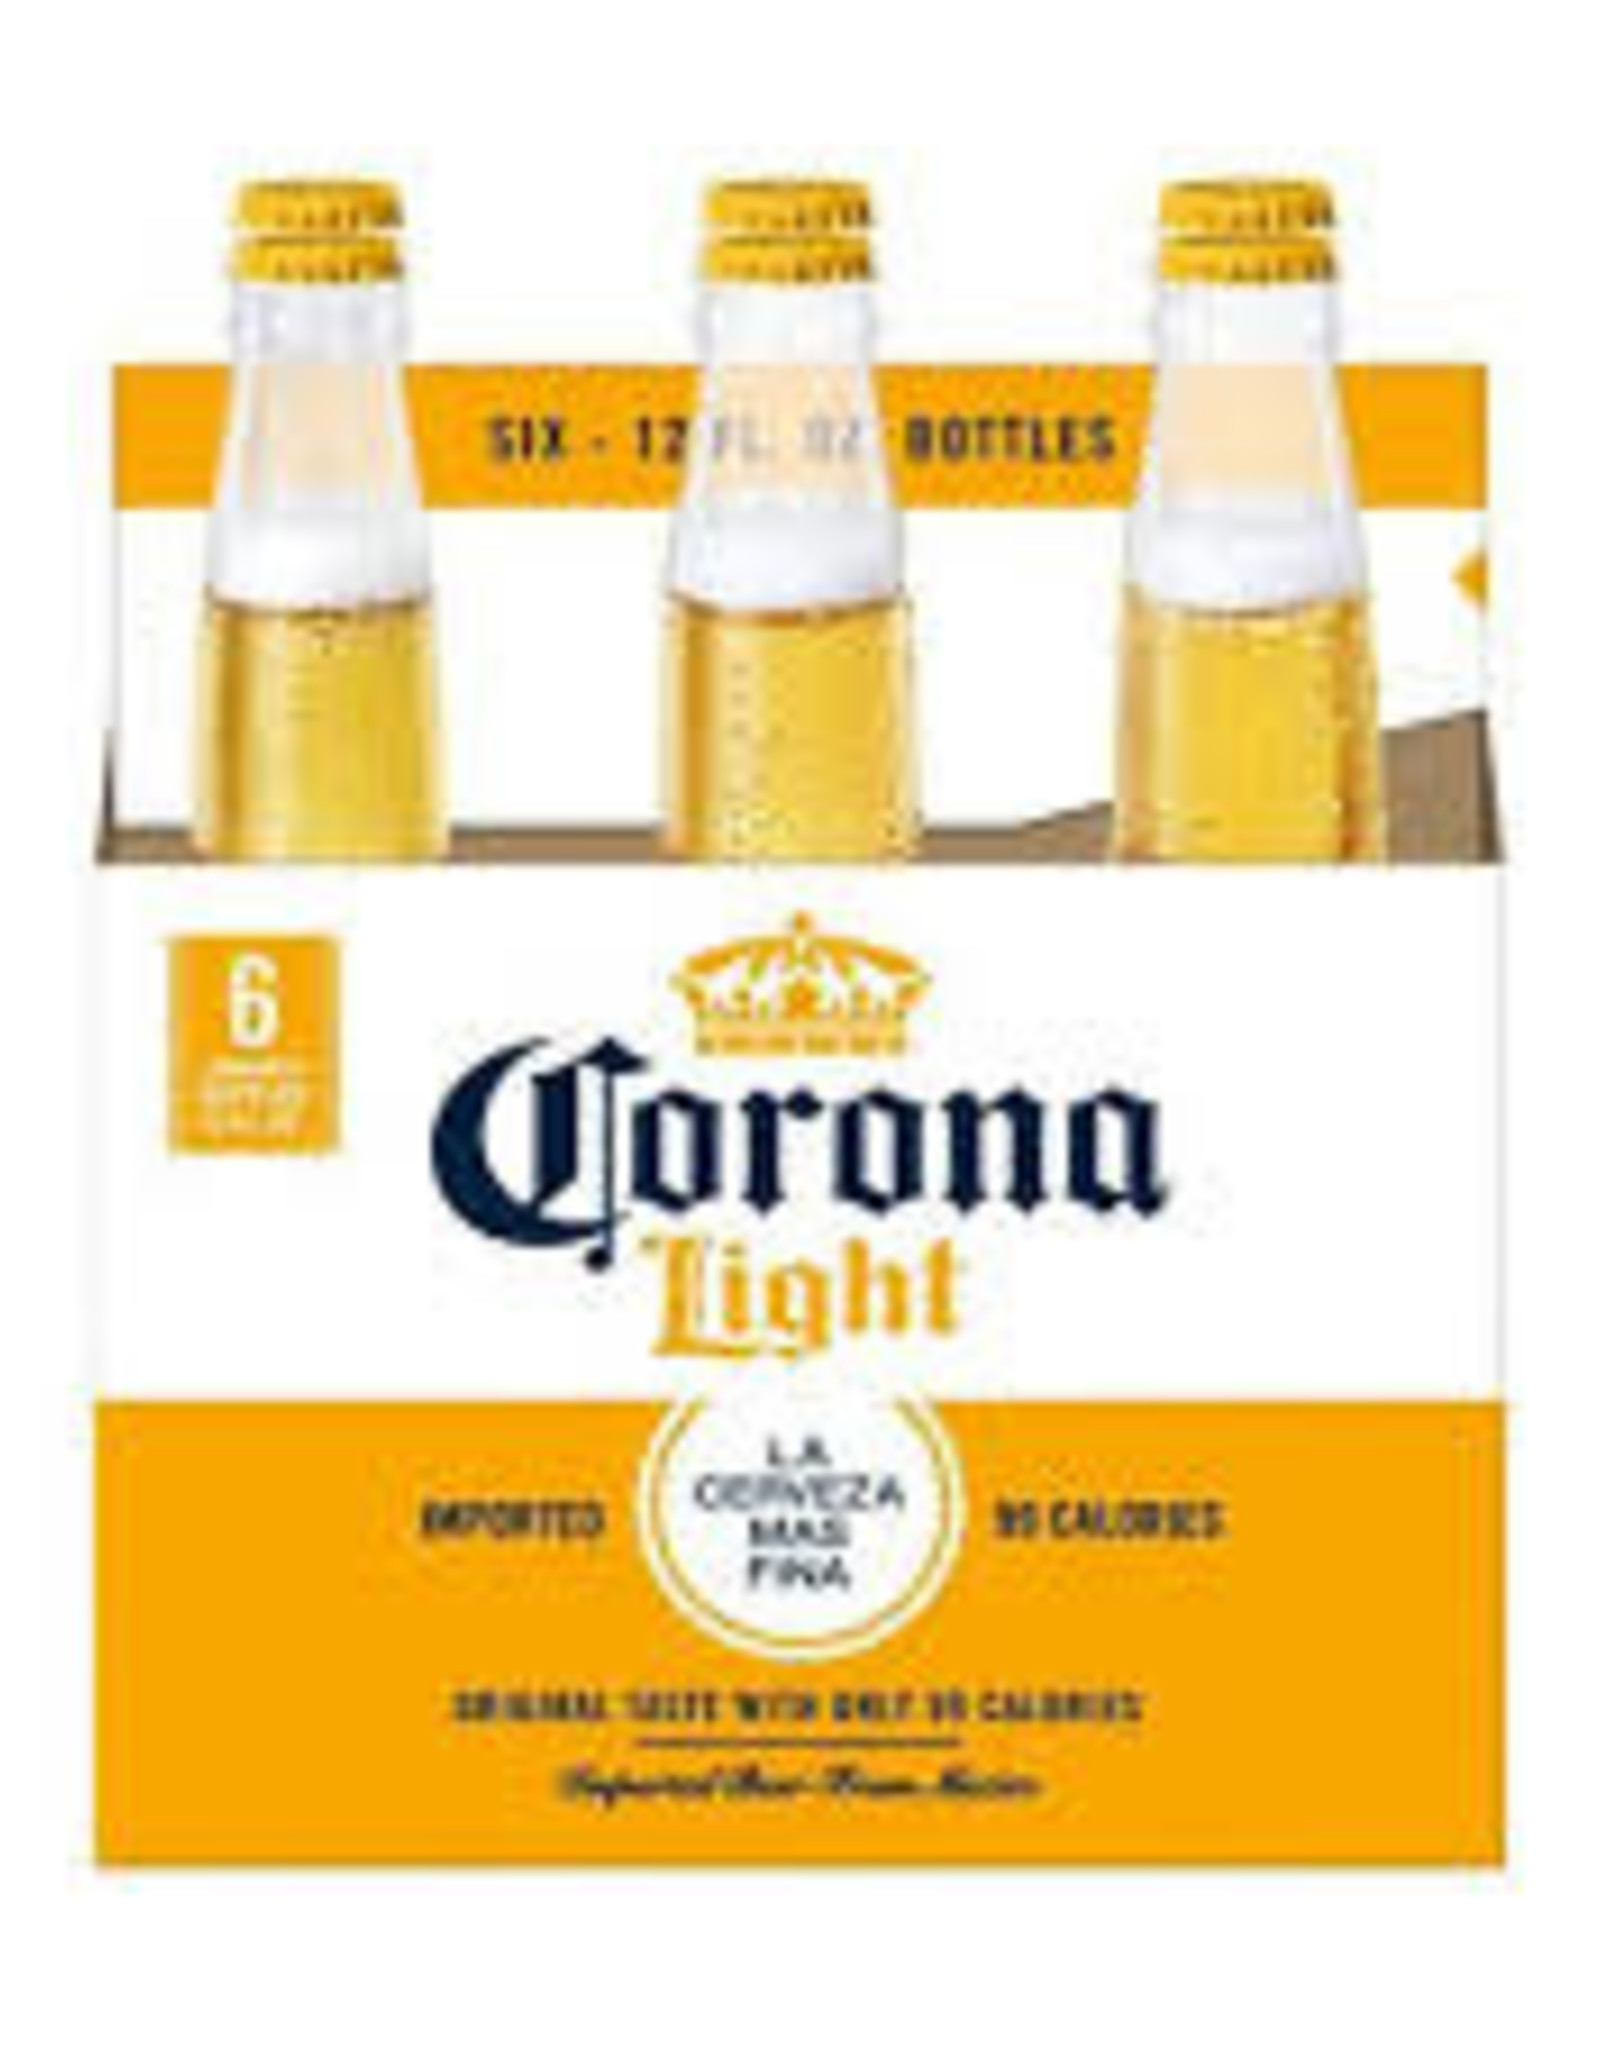 Corona Corona Light - 6pk - 12oz - Bottles